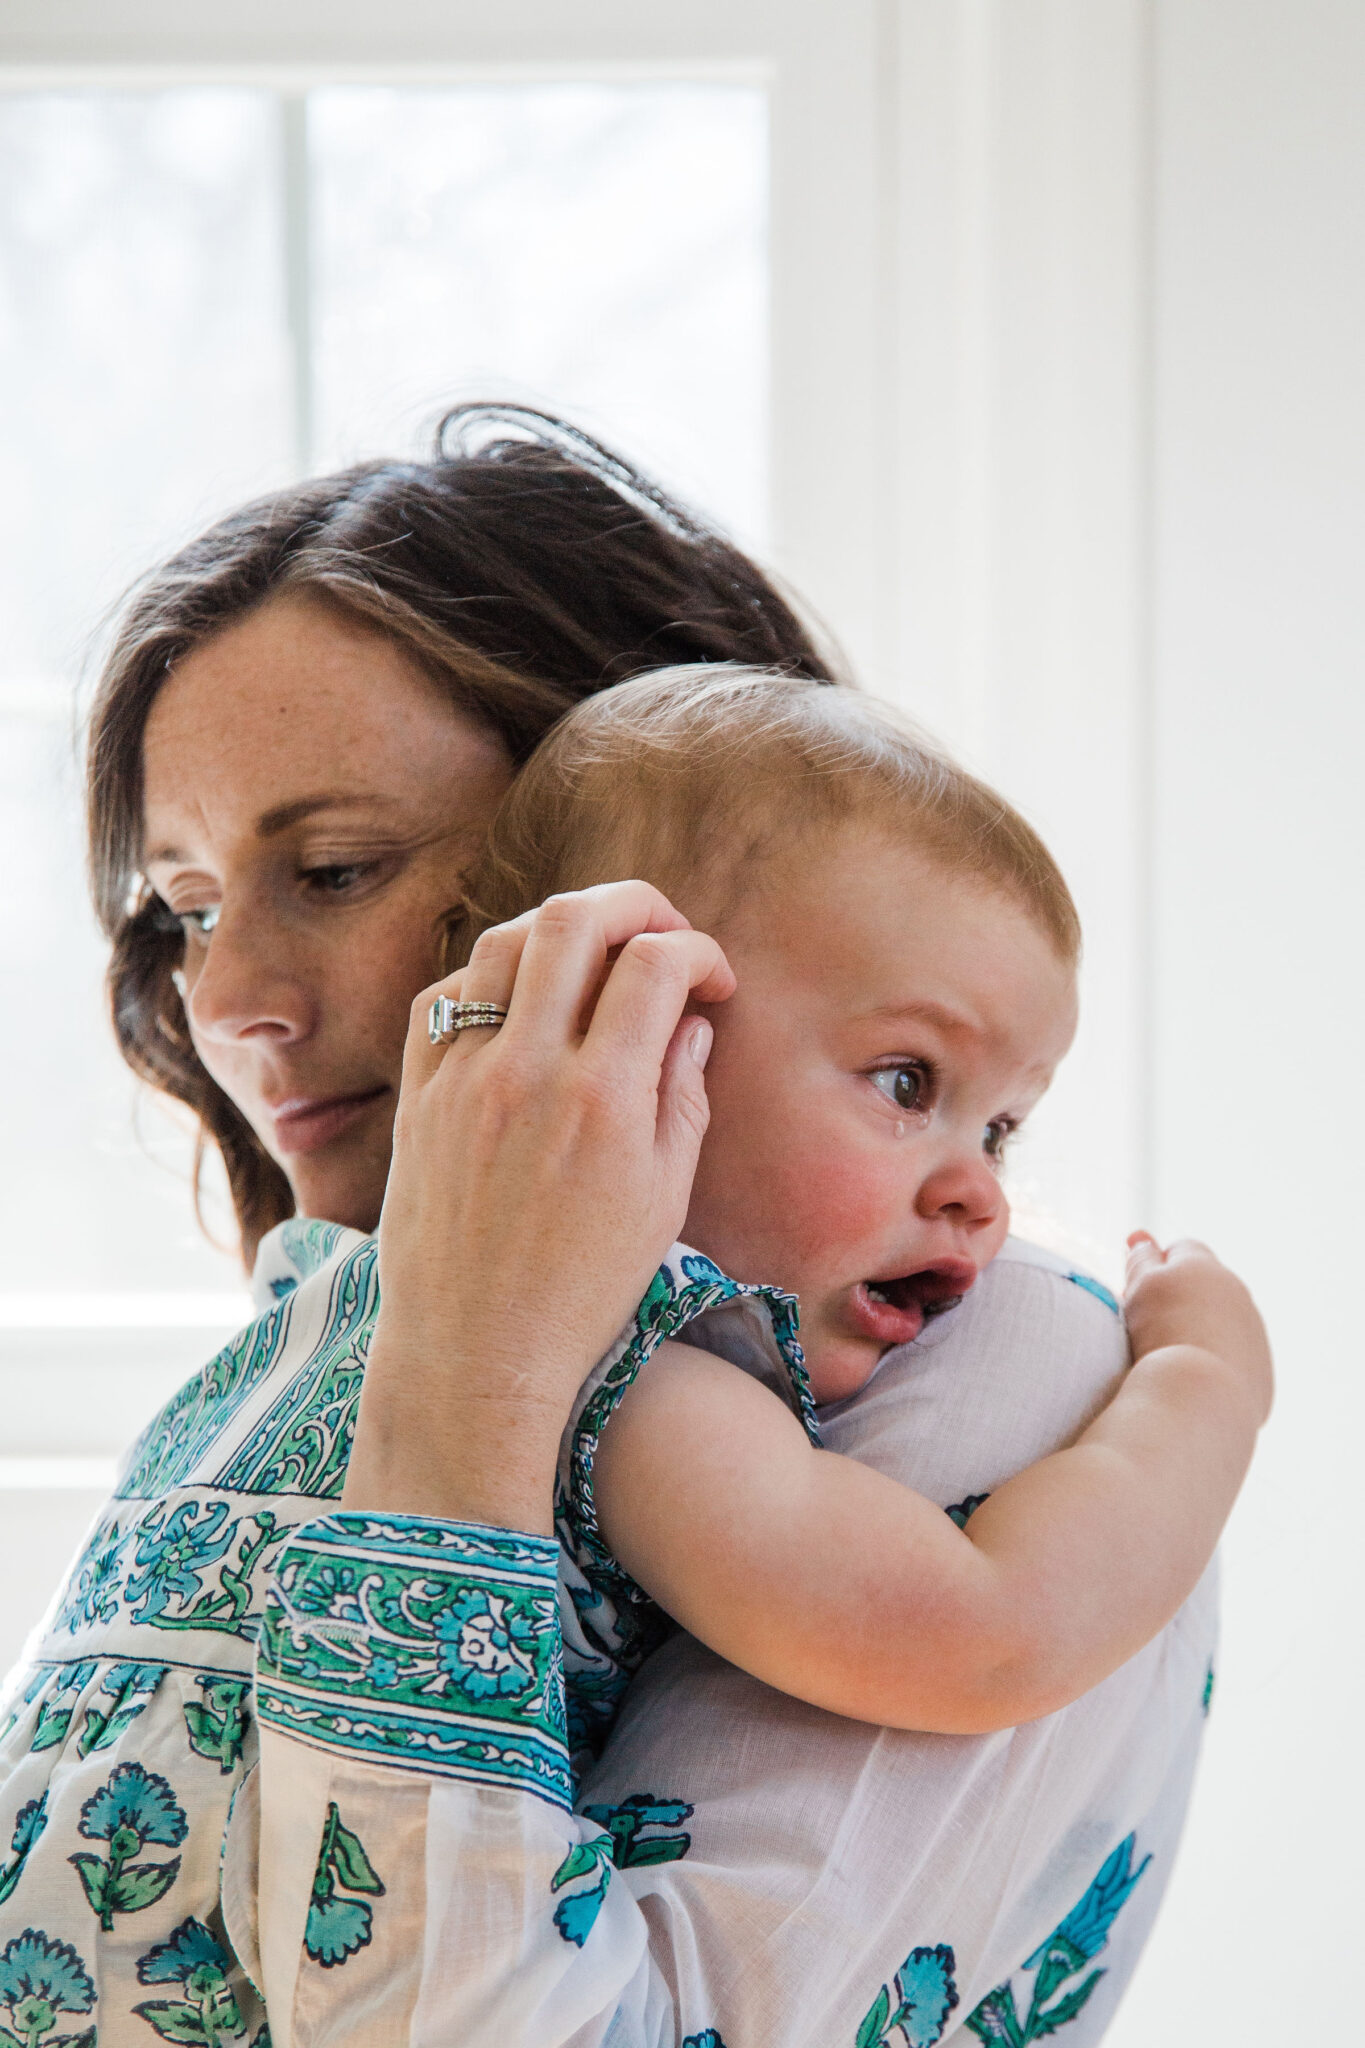 Mom holding sad baby wearing personalized jewelry warren birthstone ring